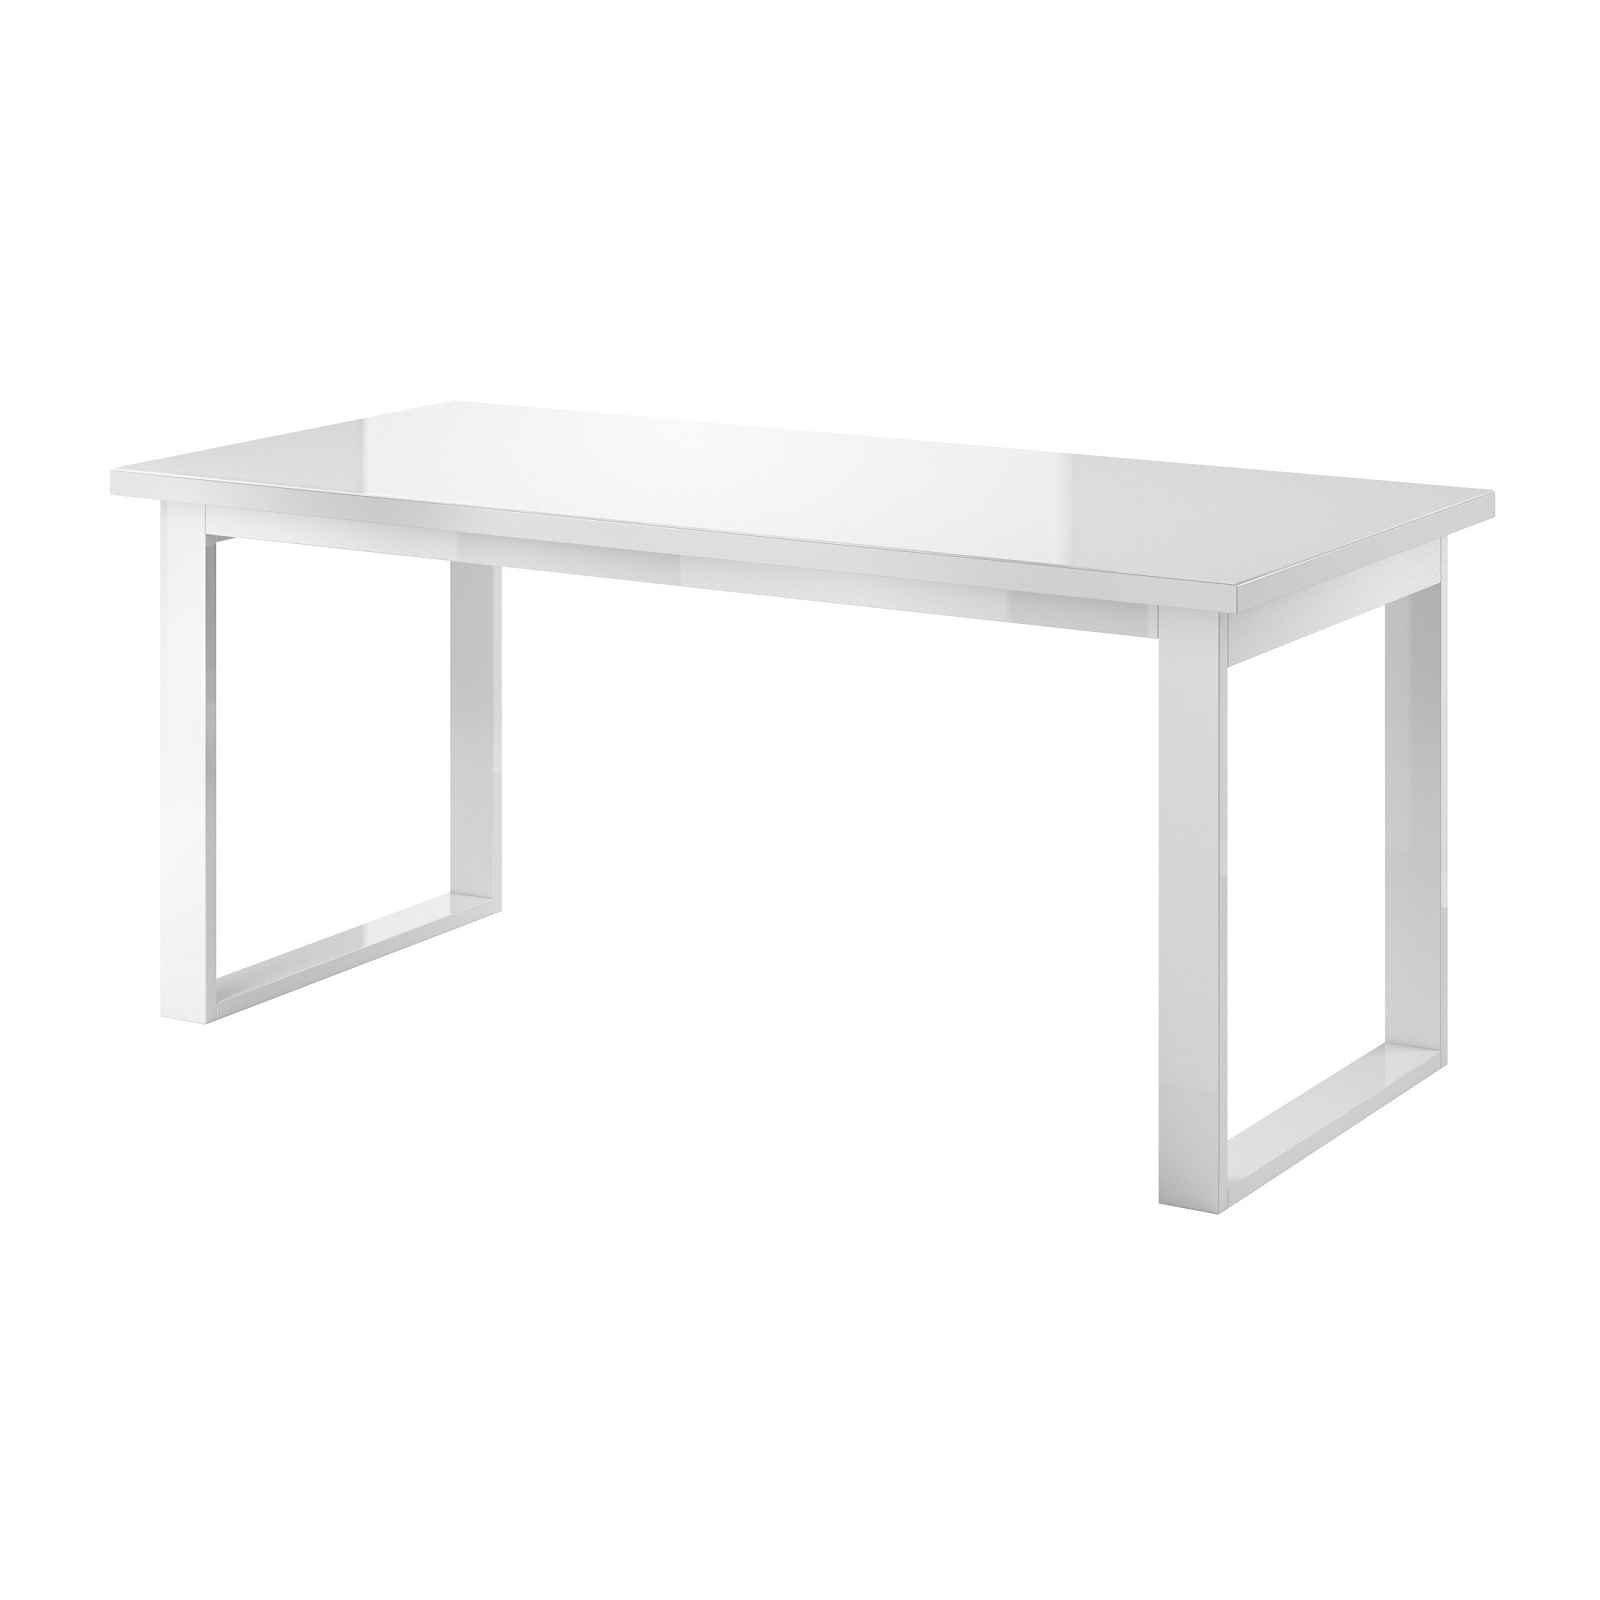 HELIO TYP rozkládací stůl, bílá/bílá sklo, 170-200 x 90 x 76 cm